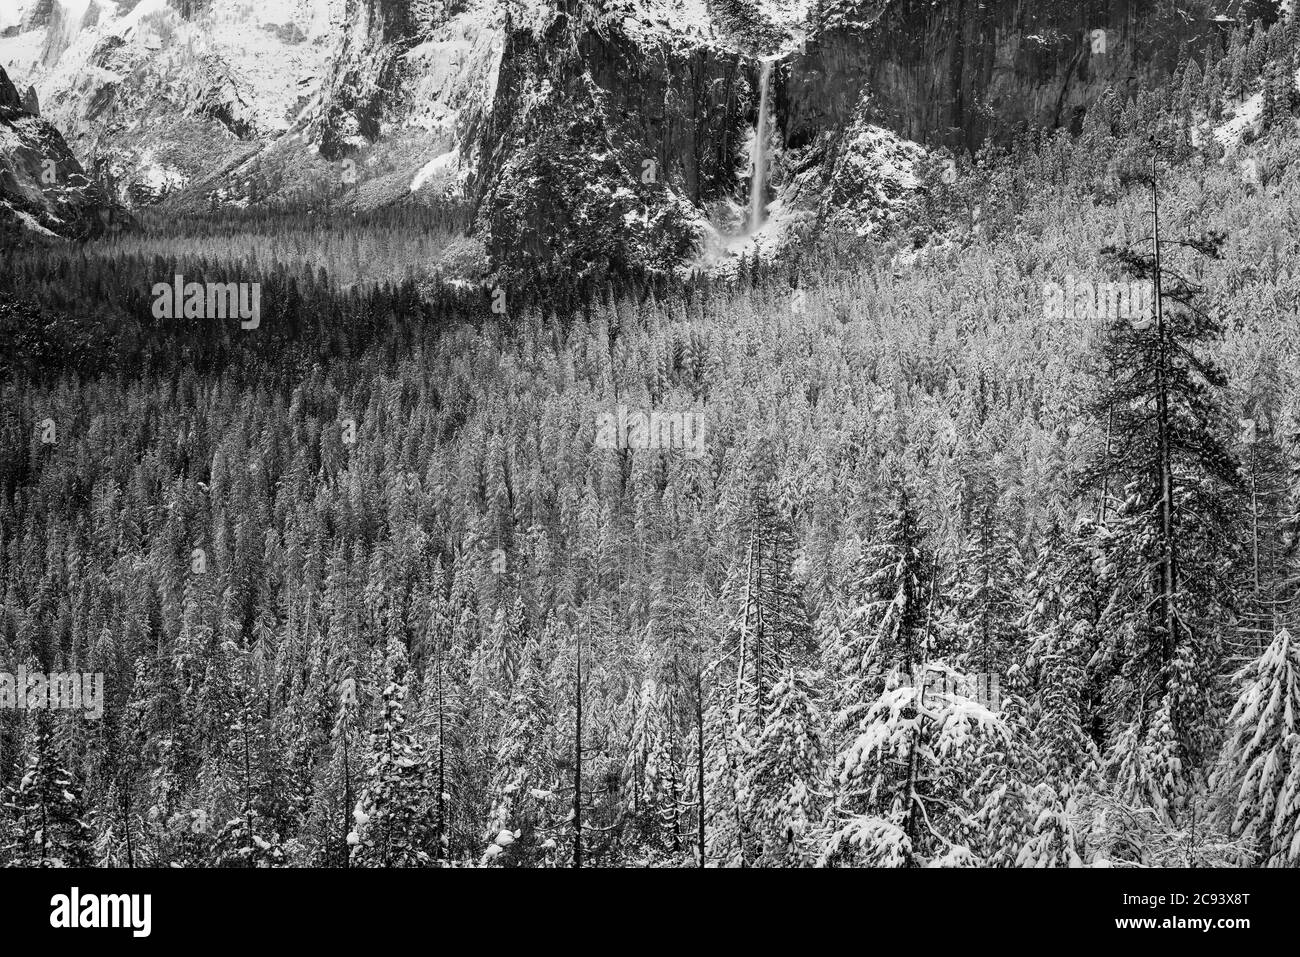 Yosemite Valley after a winter storm, Yosemite National Park, California USA Stock Photo